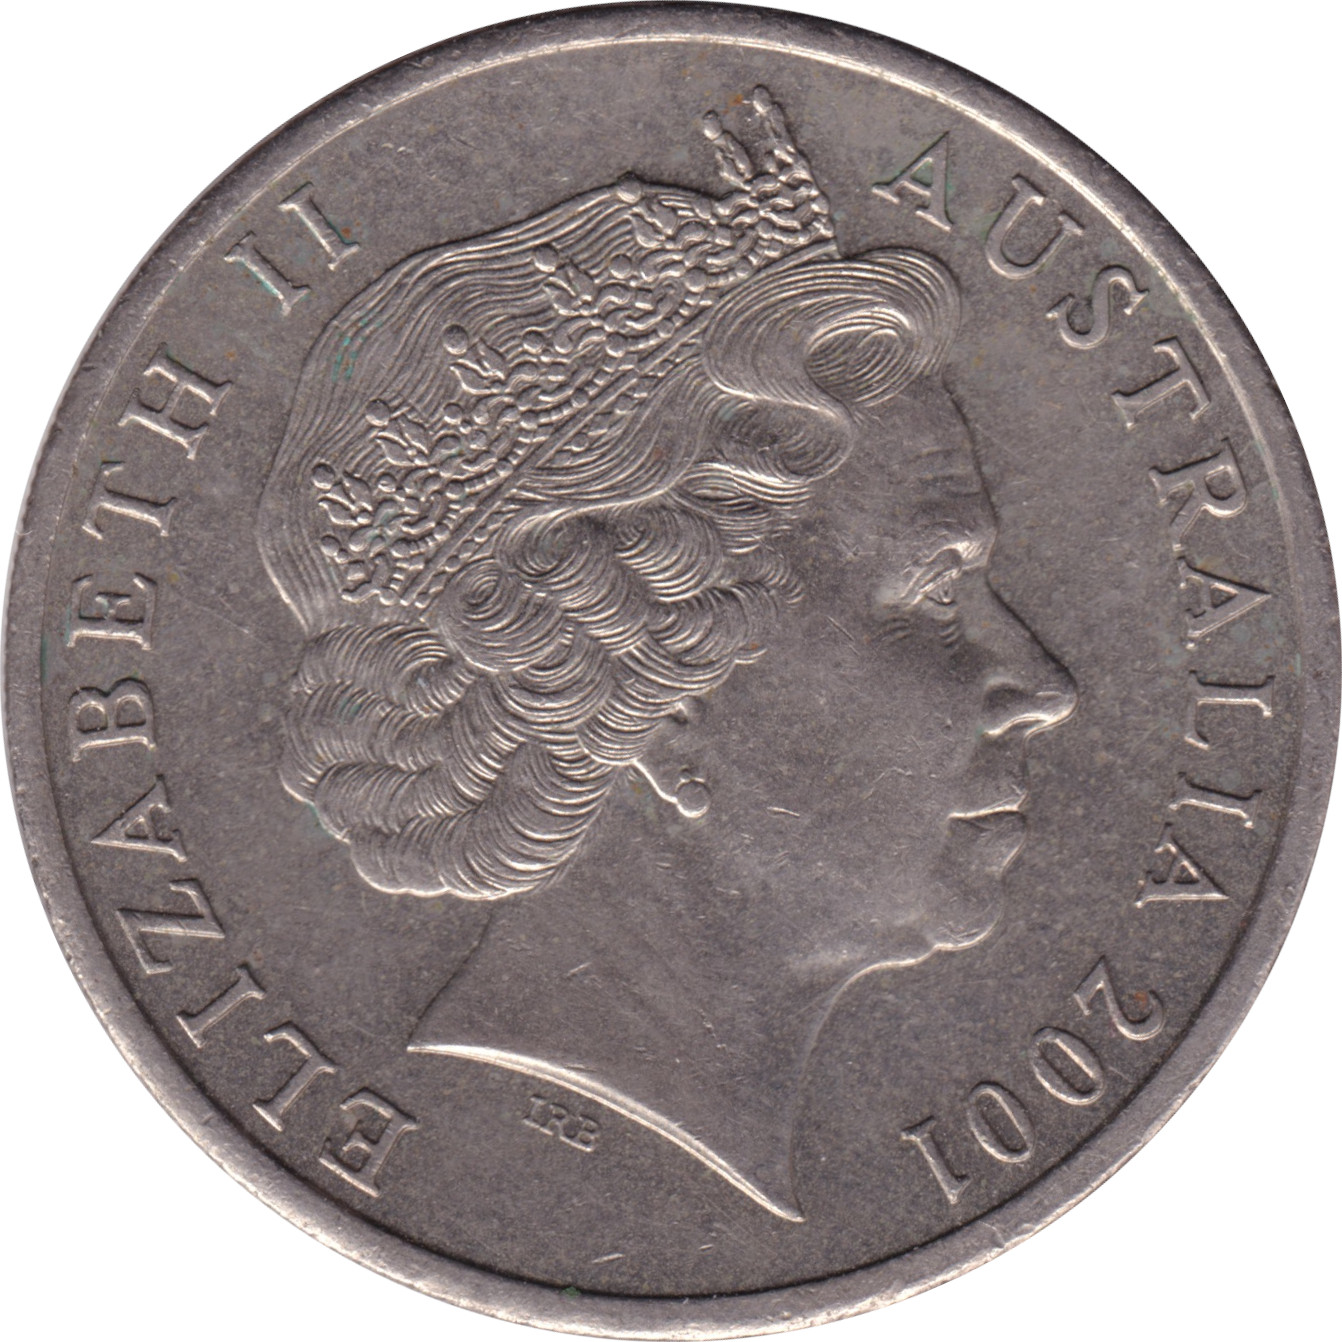 20 cents - Sir Donald Bradman